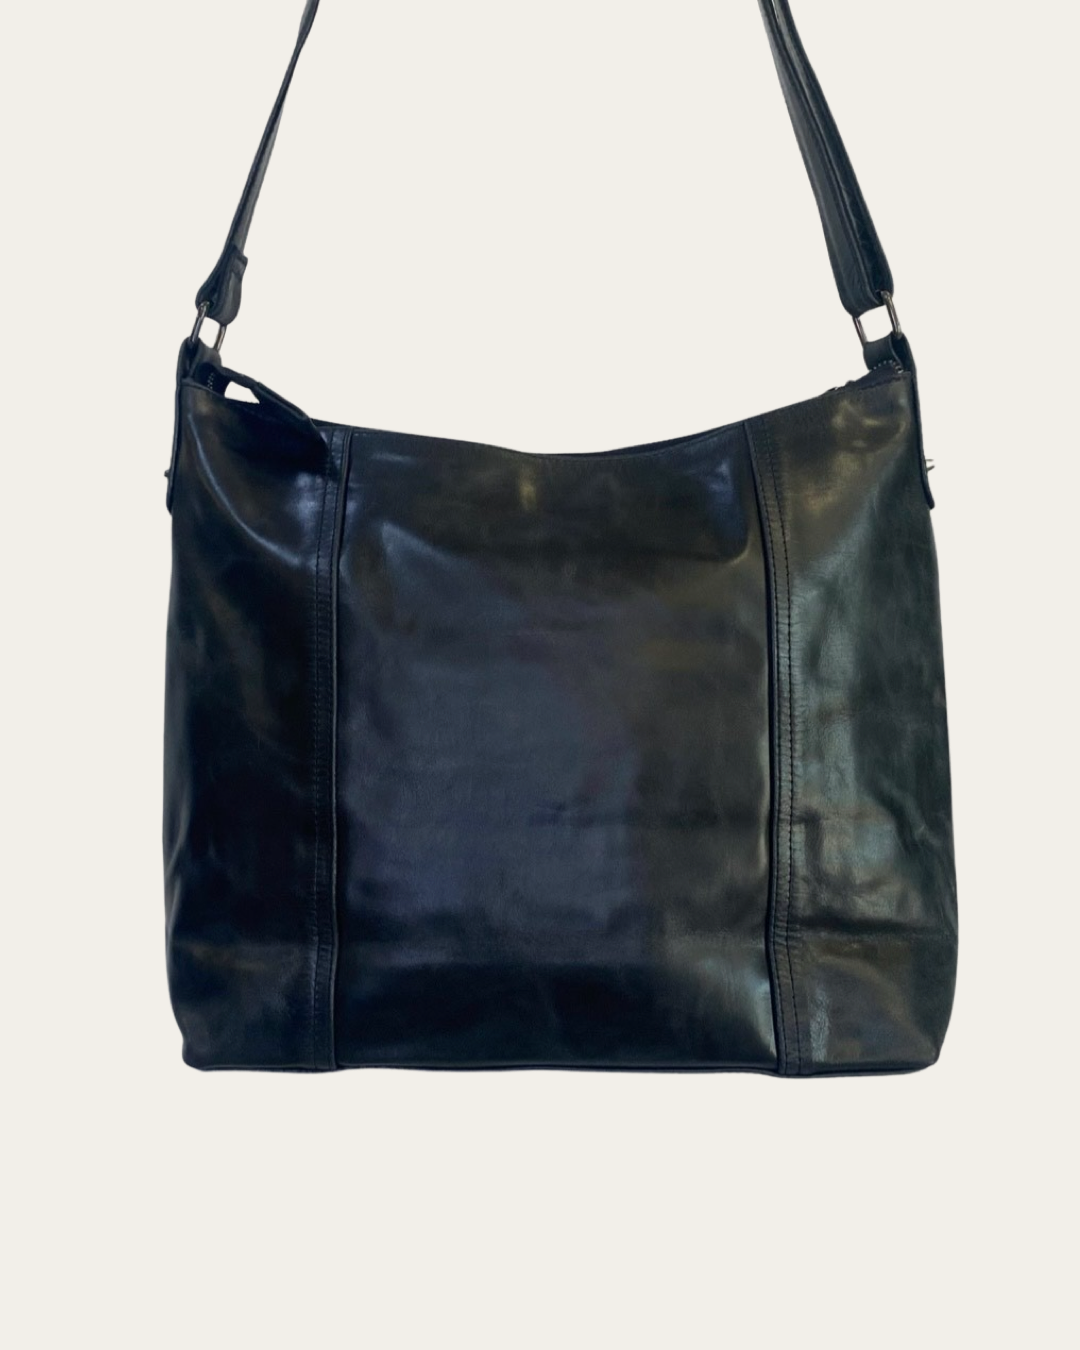 Barcelona Bag - BARE Leather